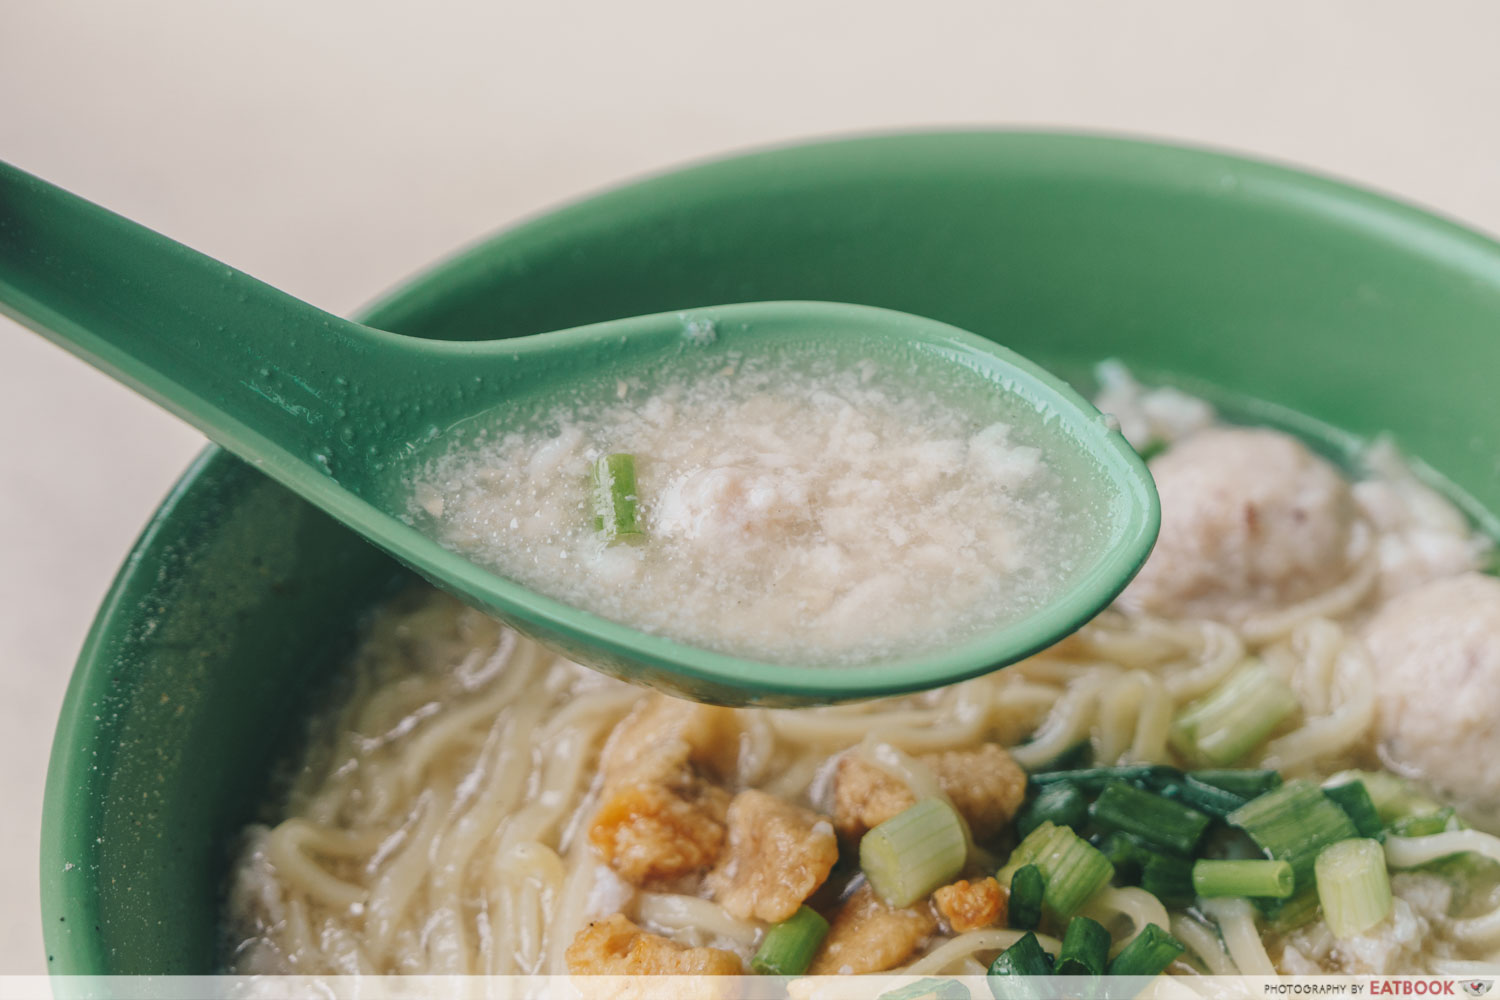 Soon Heng Pork Noodles - Spoonful of soup